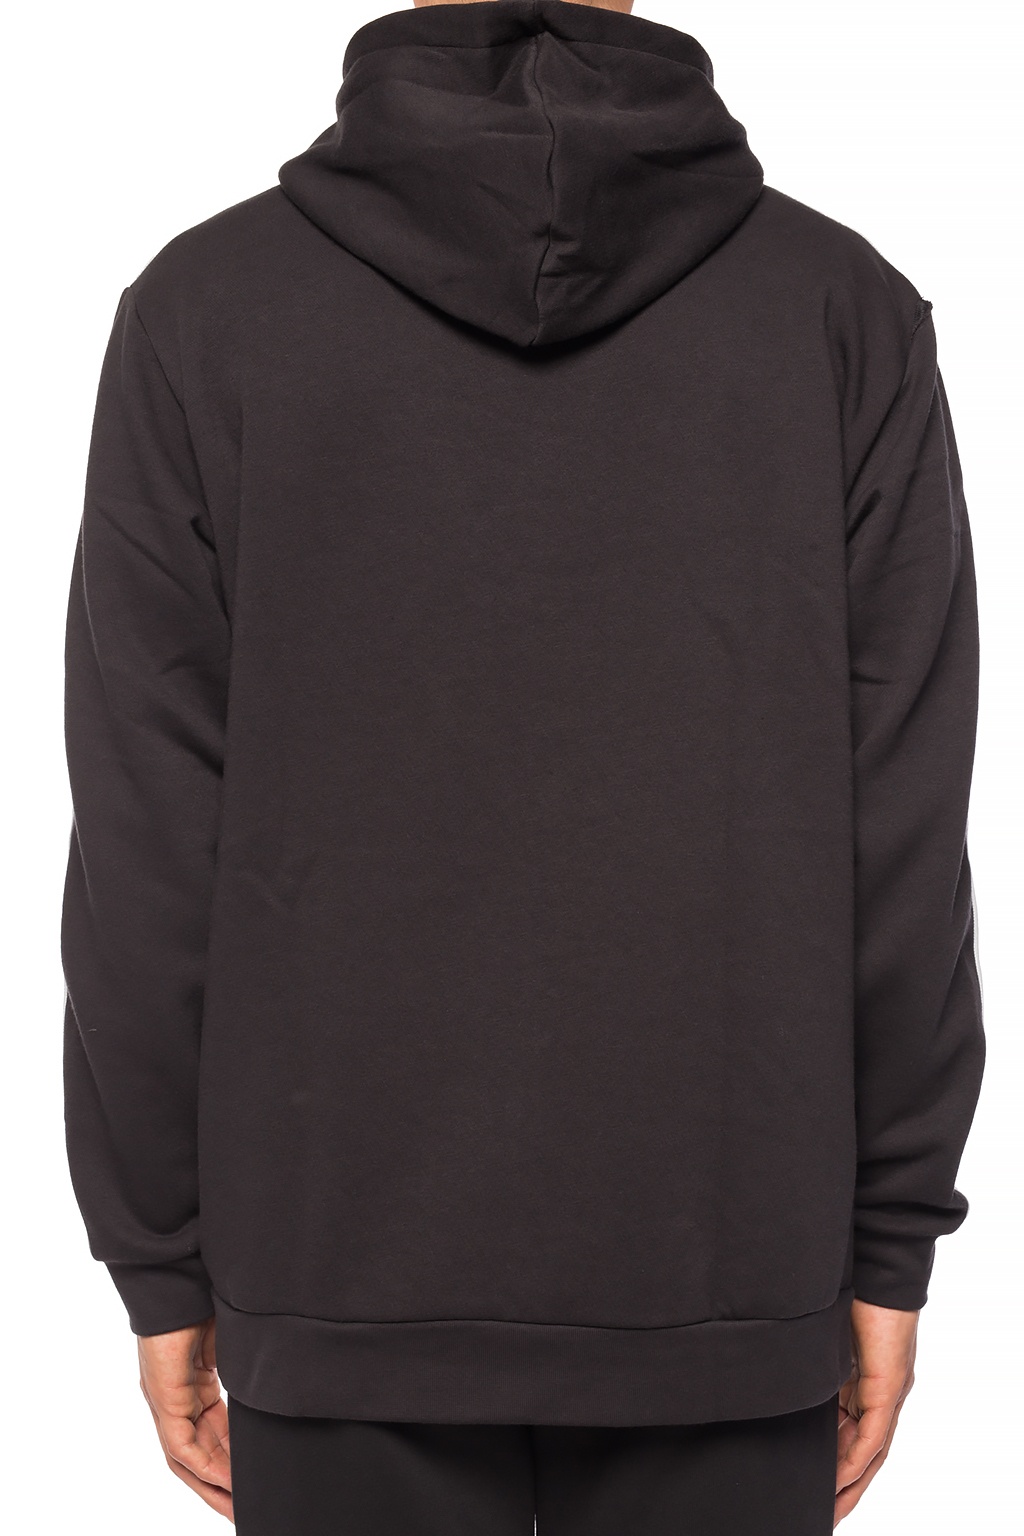 ADIDAS Originals hoodie | Spesifikasjoner Adidas badminton Korte Bukser 2 In 1 Primeblue | IetpShops | Men's Clothing